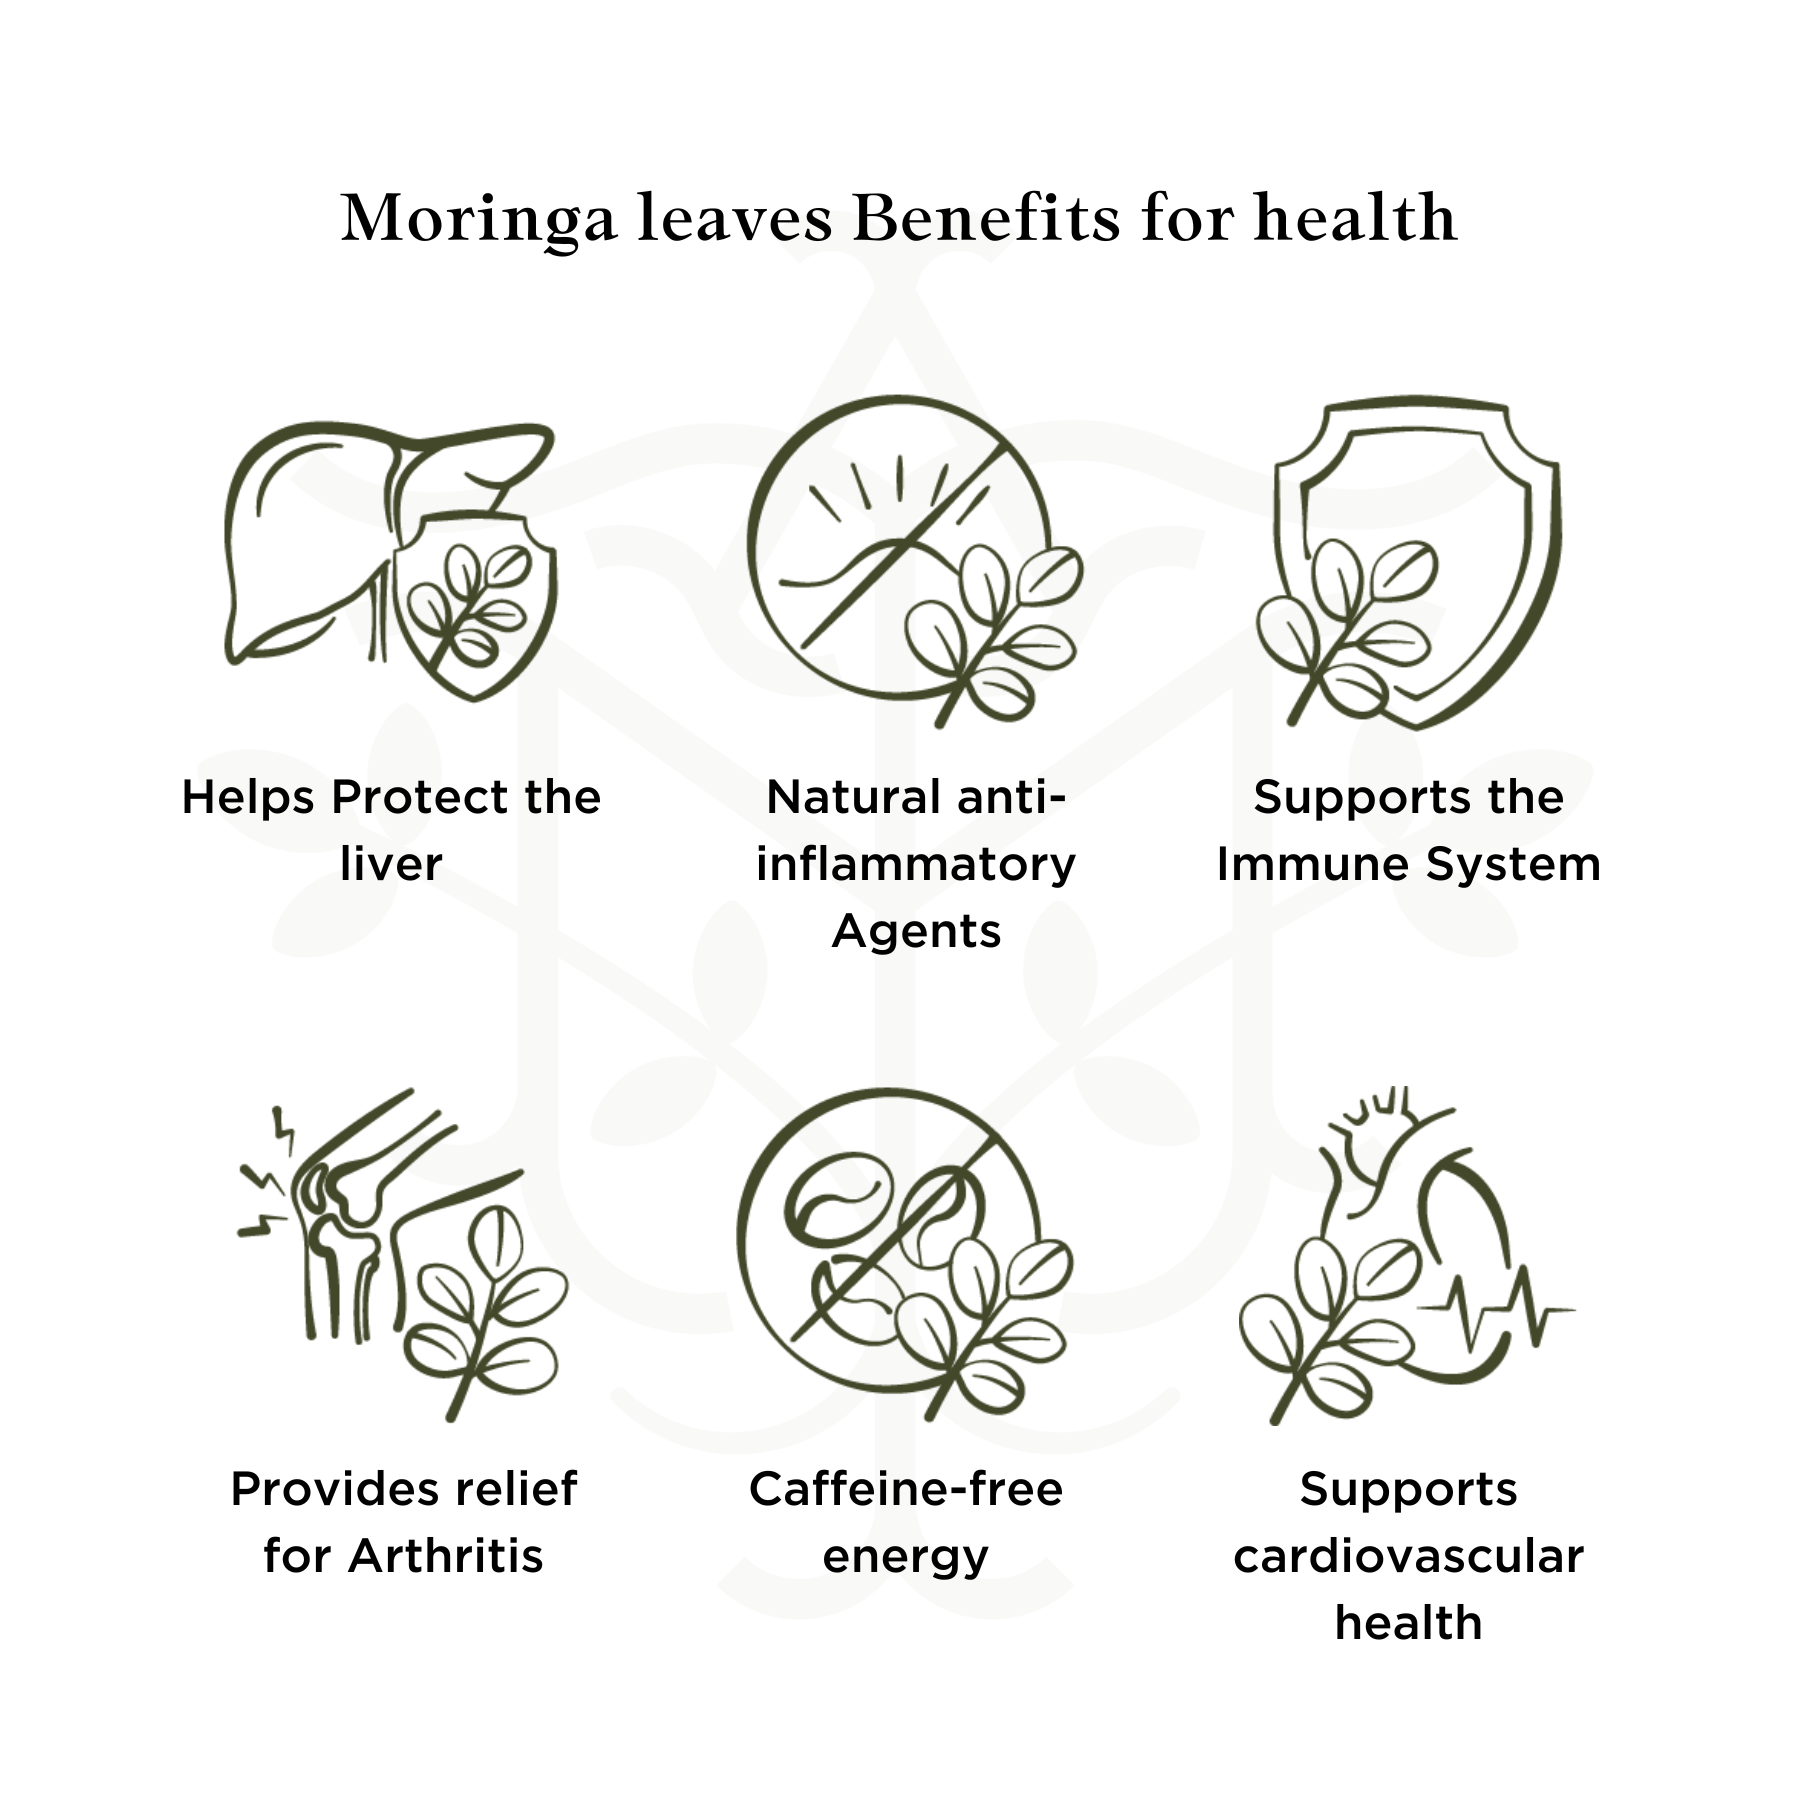 organic moringa leaf powder benefit helps protect liver and inflammatory immune system authorizes energy icons